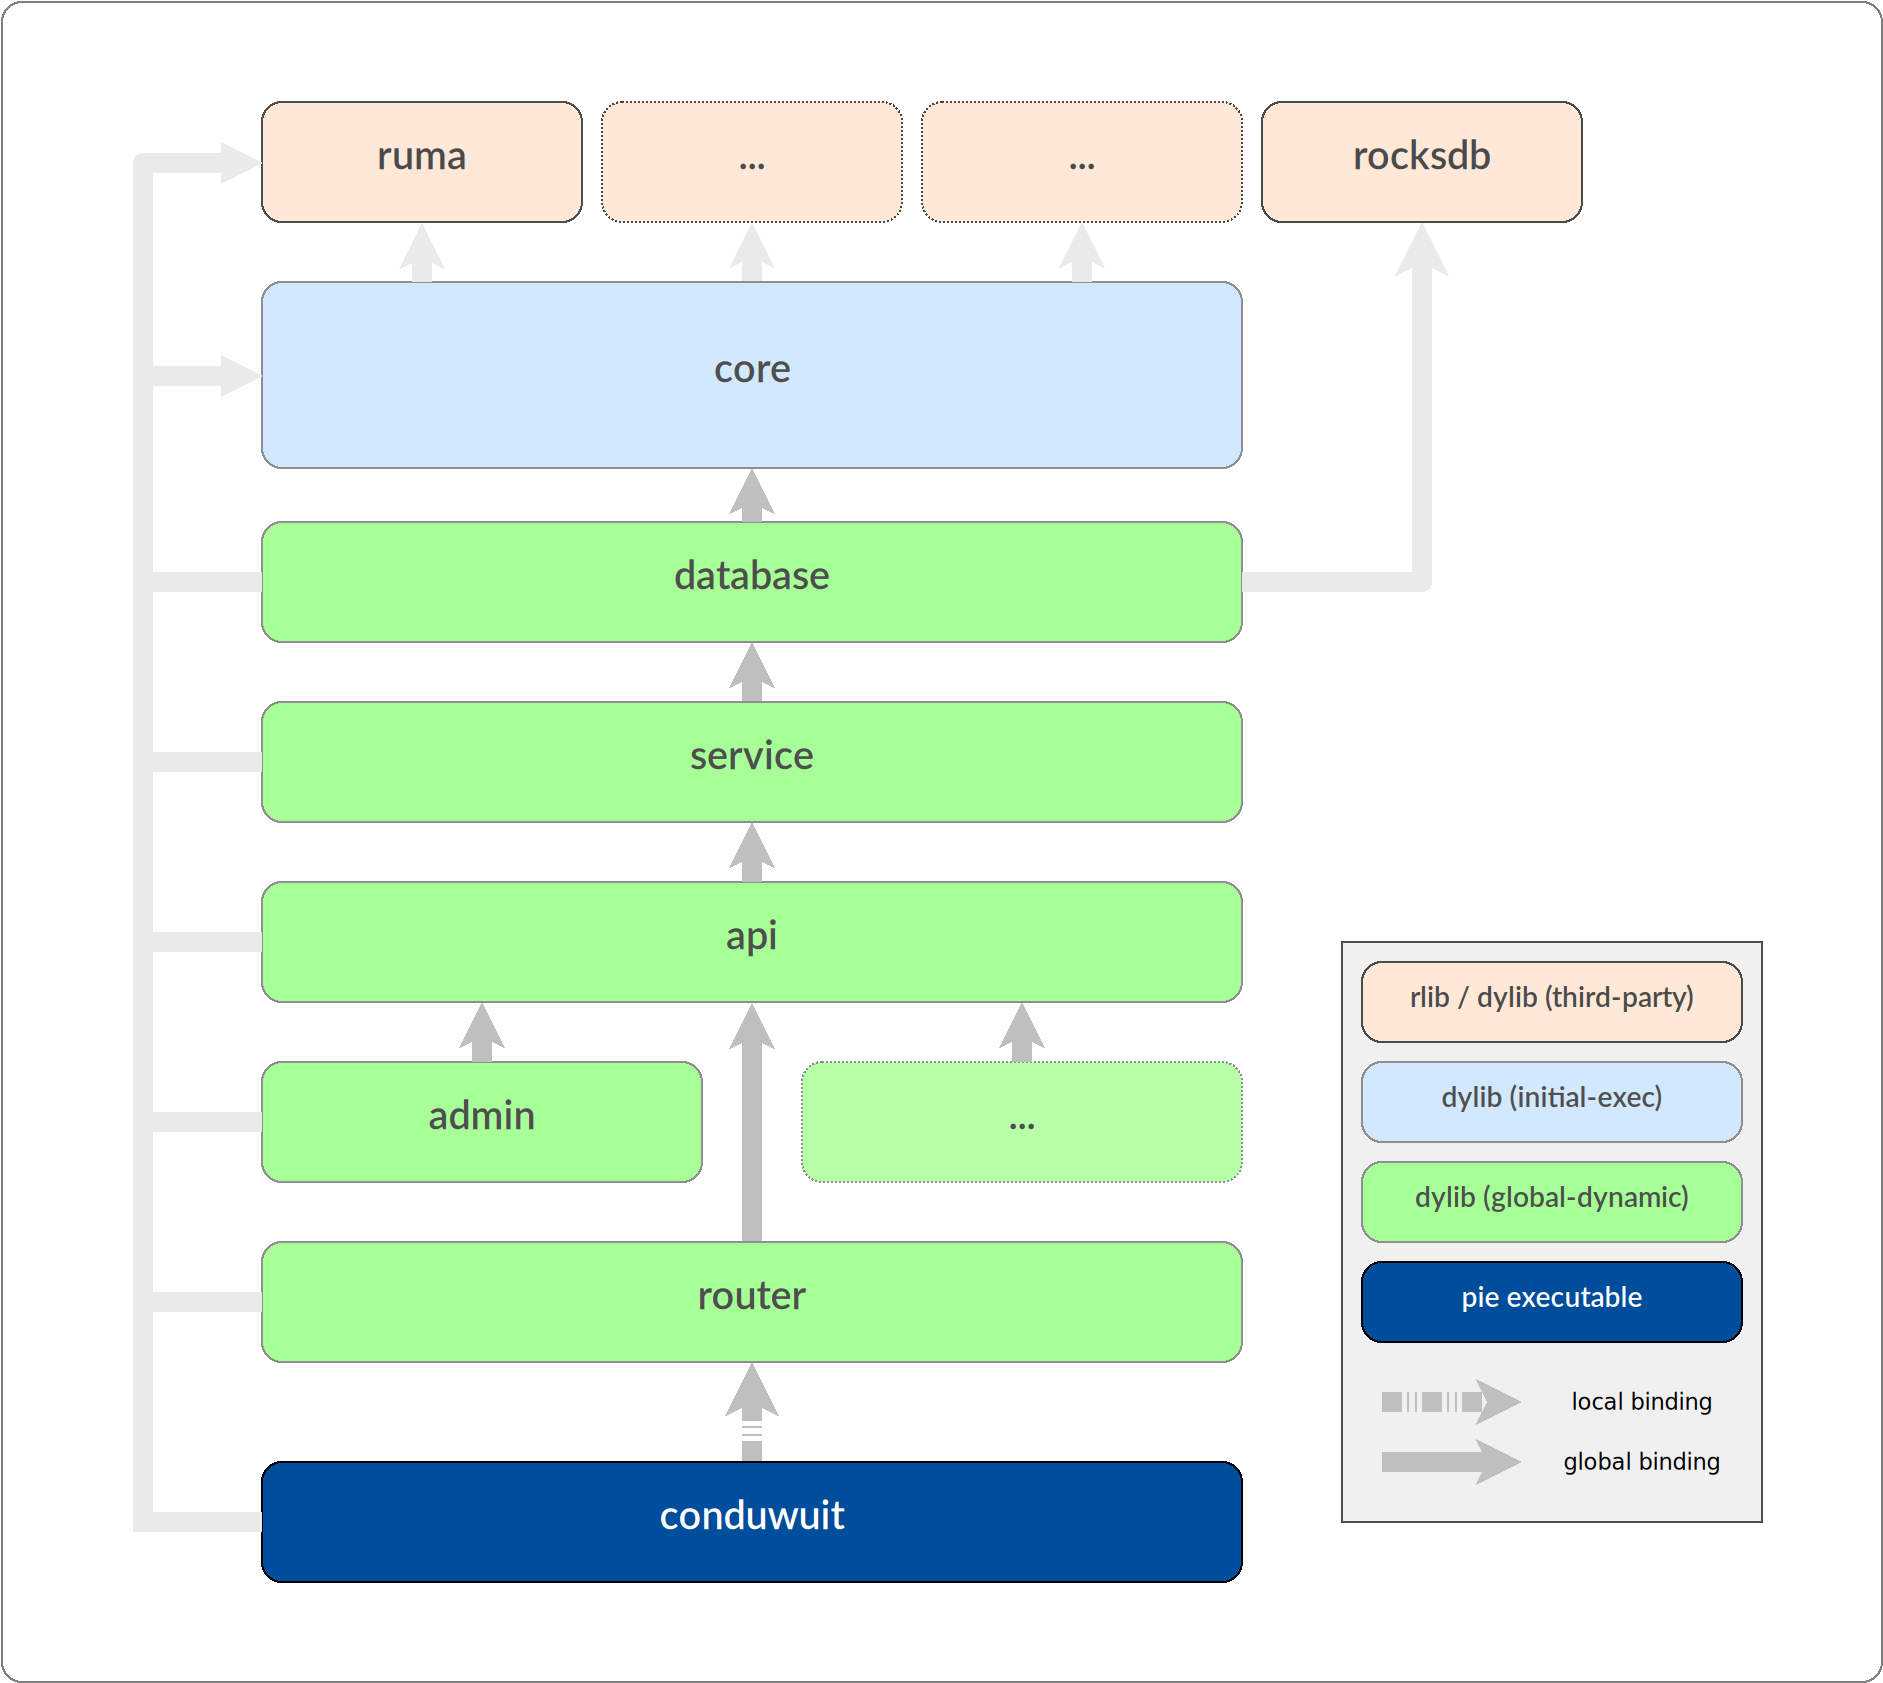 conduwuit's dynamic library setup diagram - created by Jason Volk